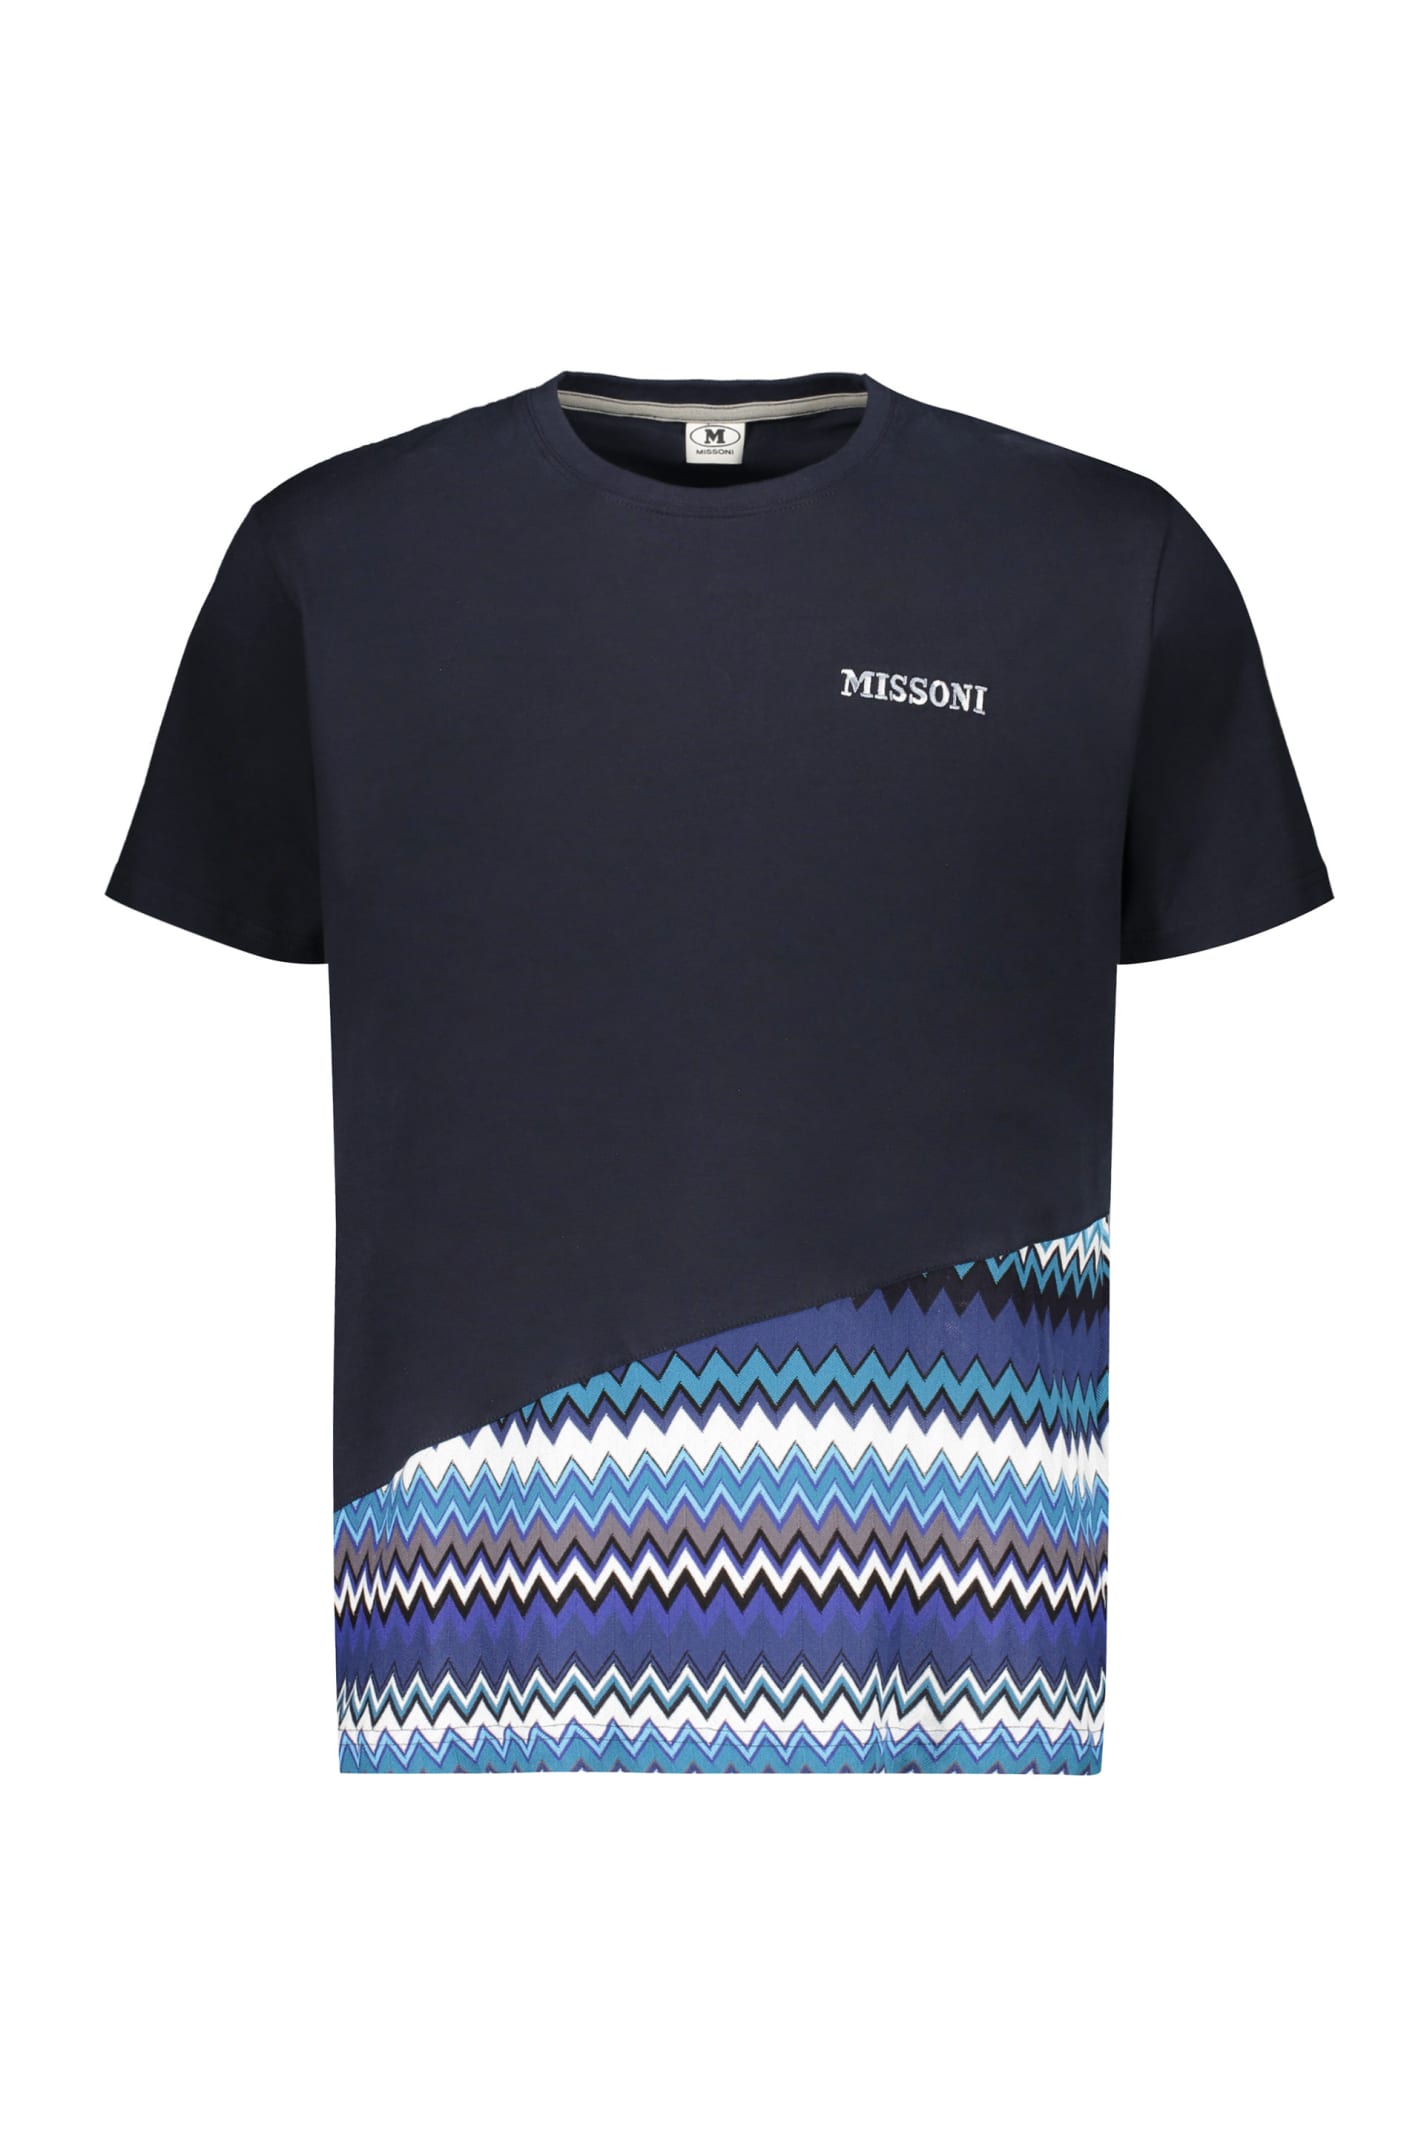 Missoni Logo Cotton T-shirt In Blue